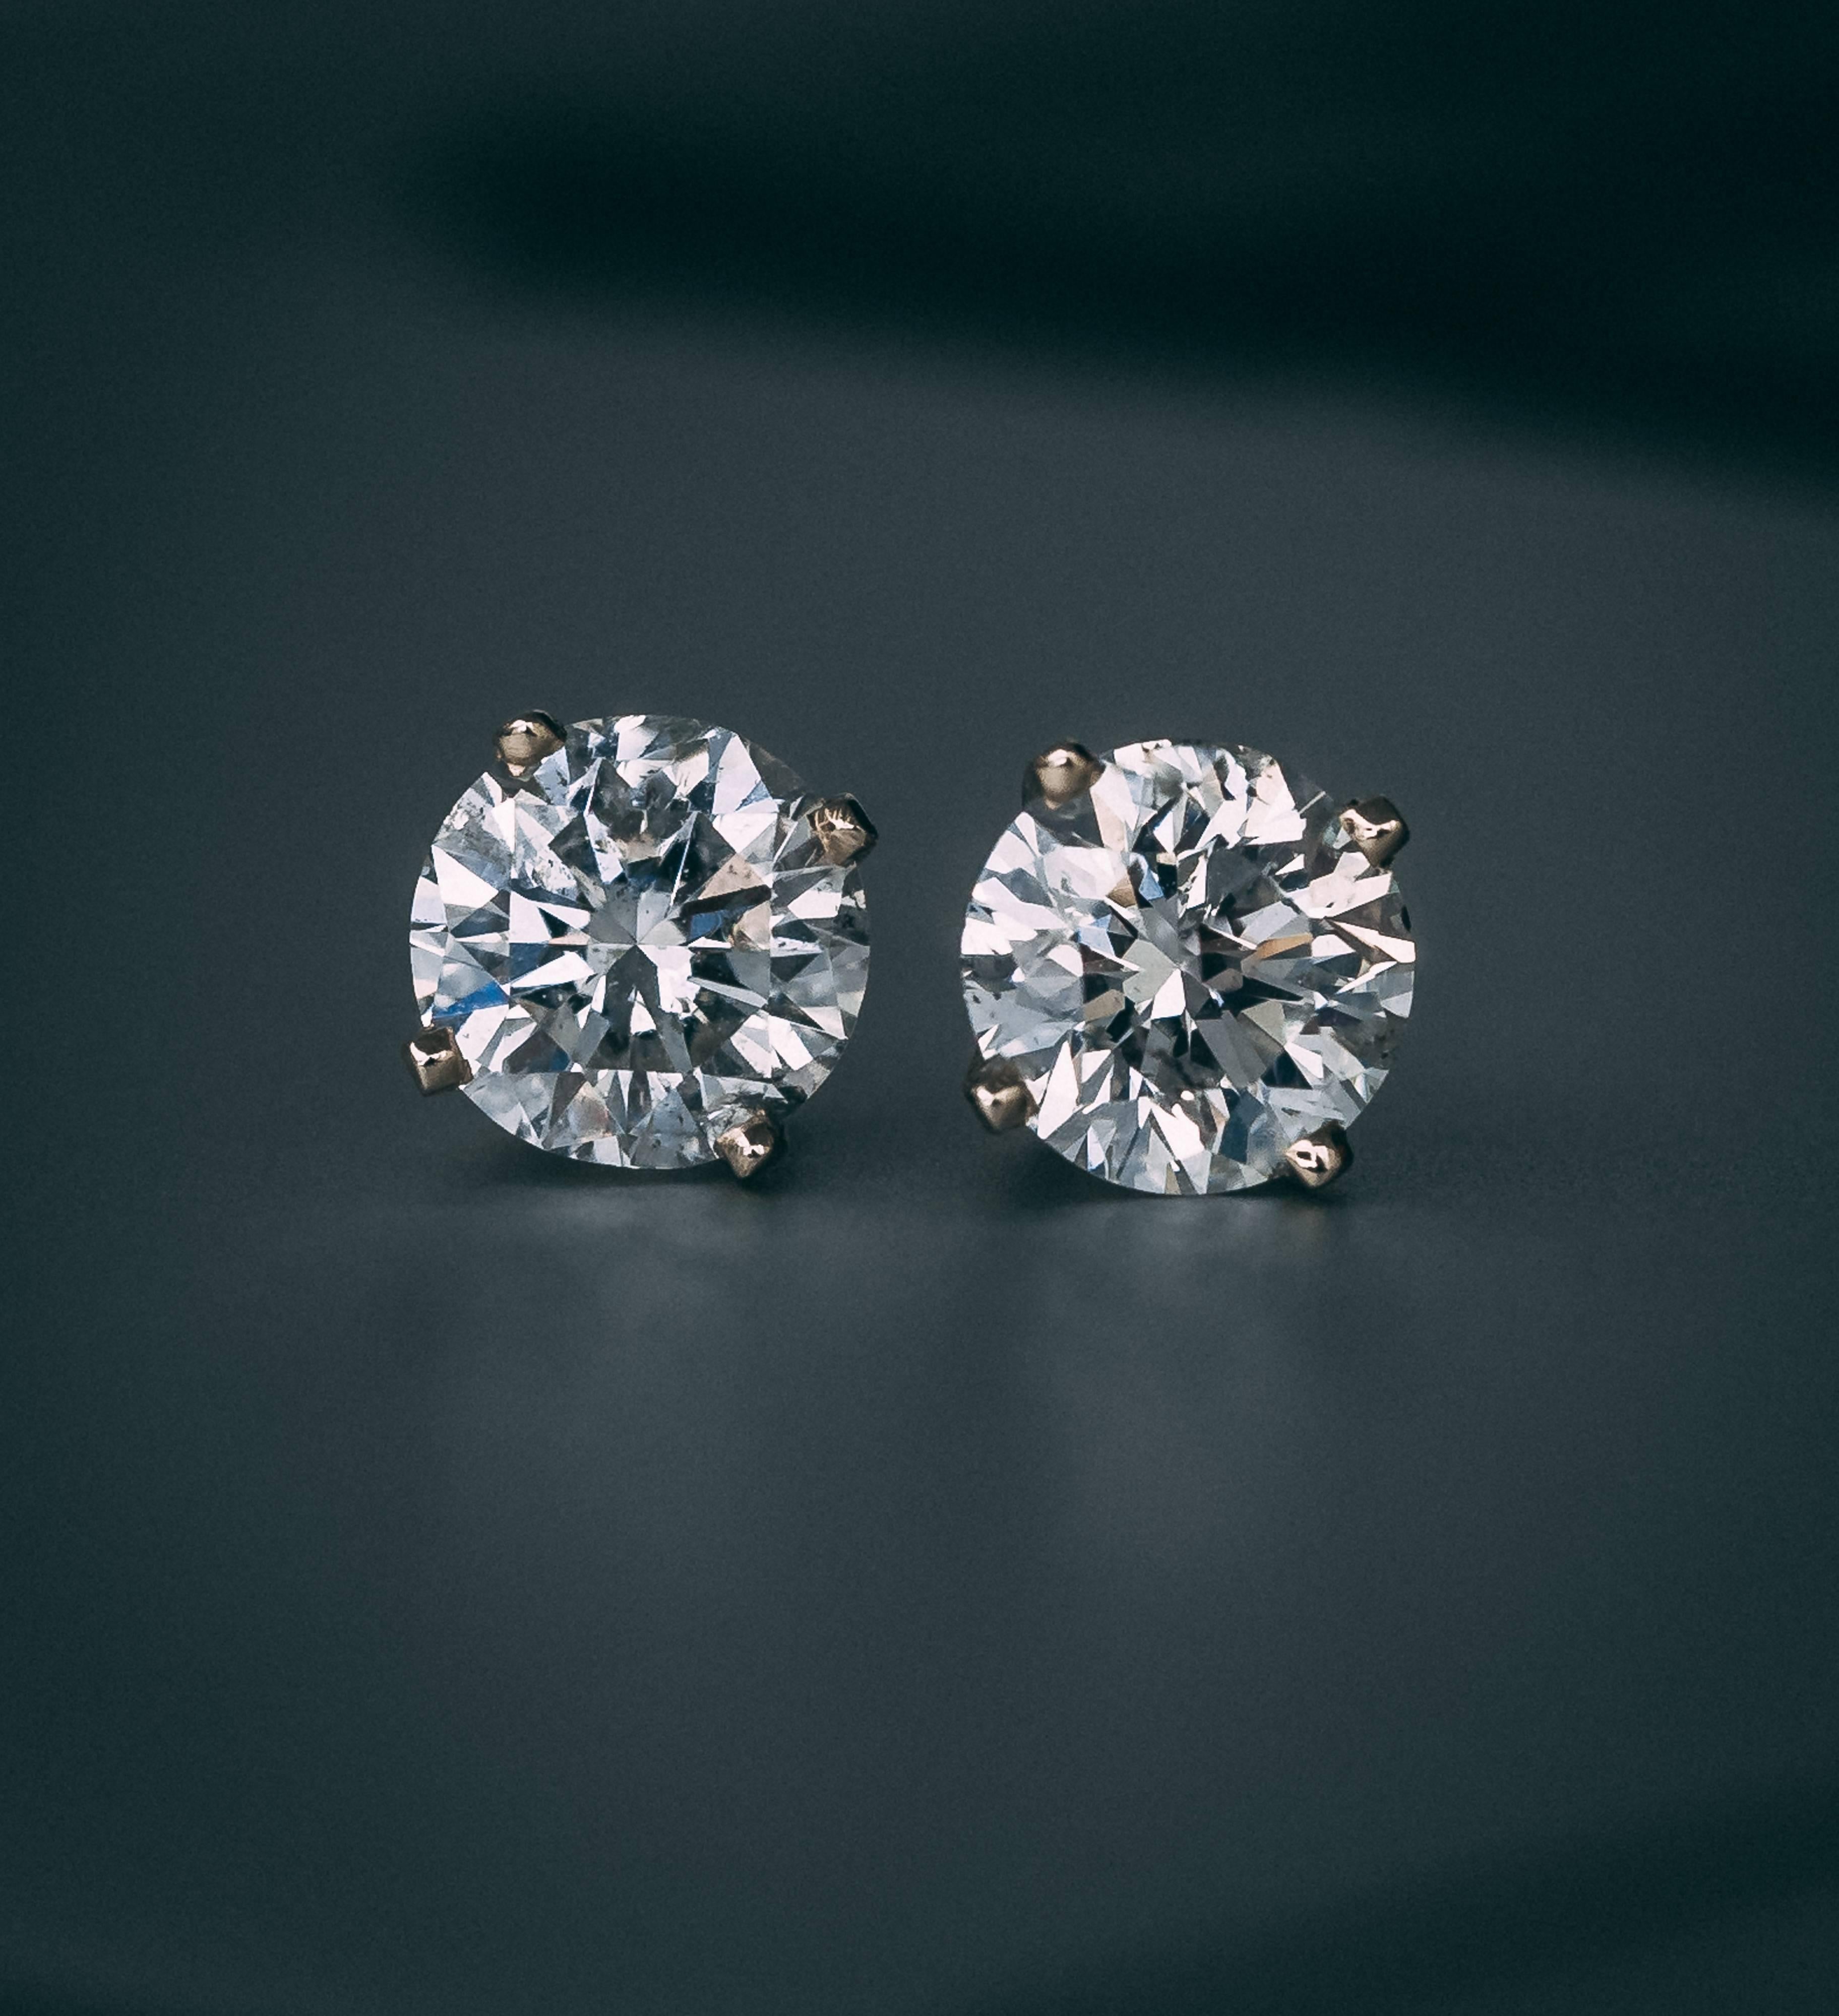 1.5 ct diamond earrings